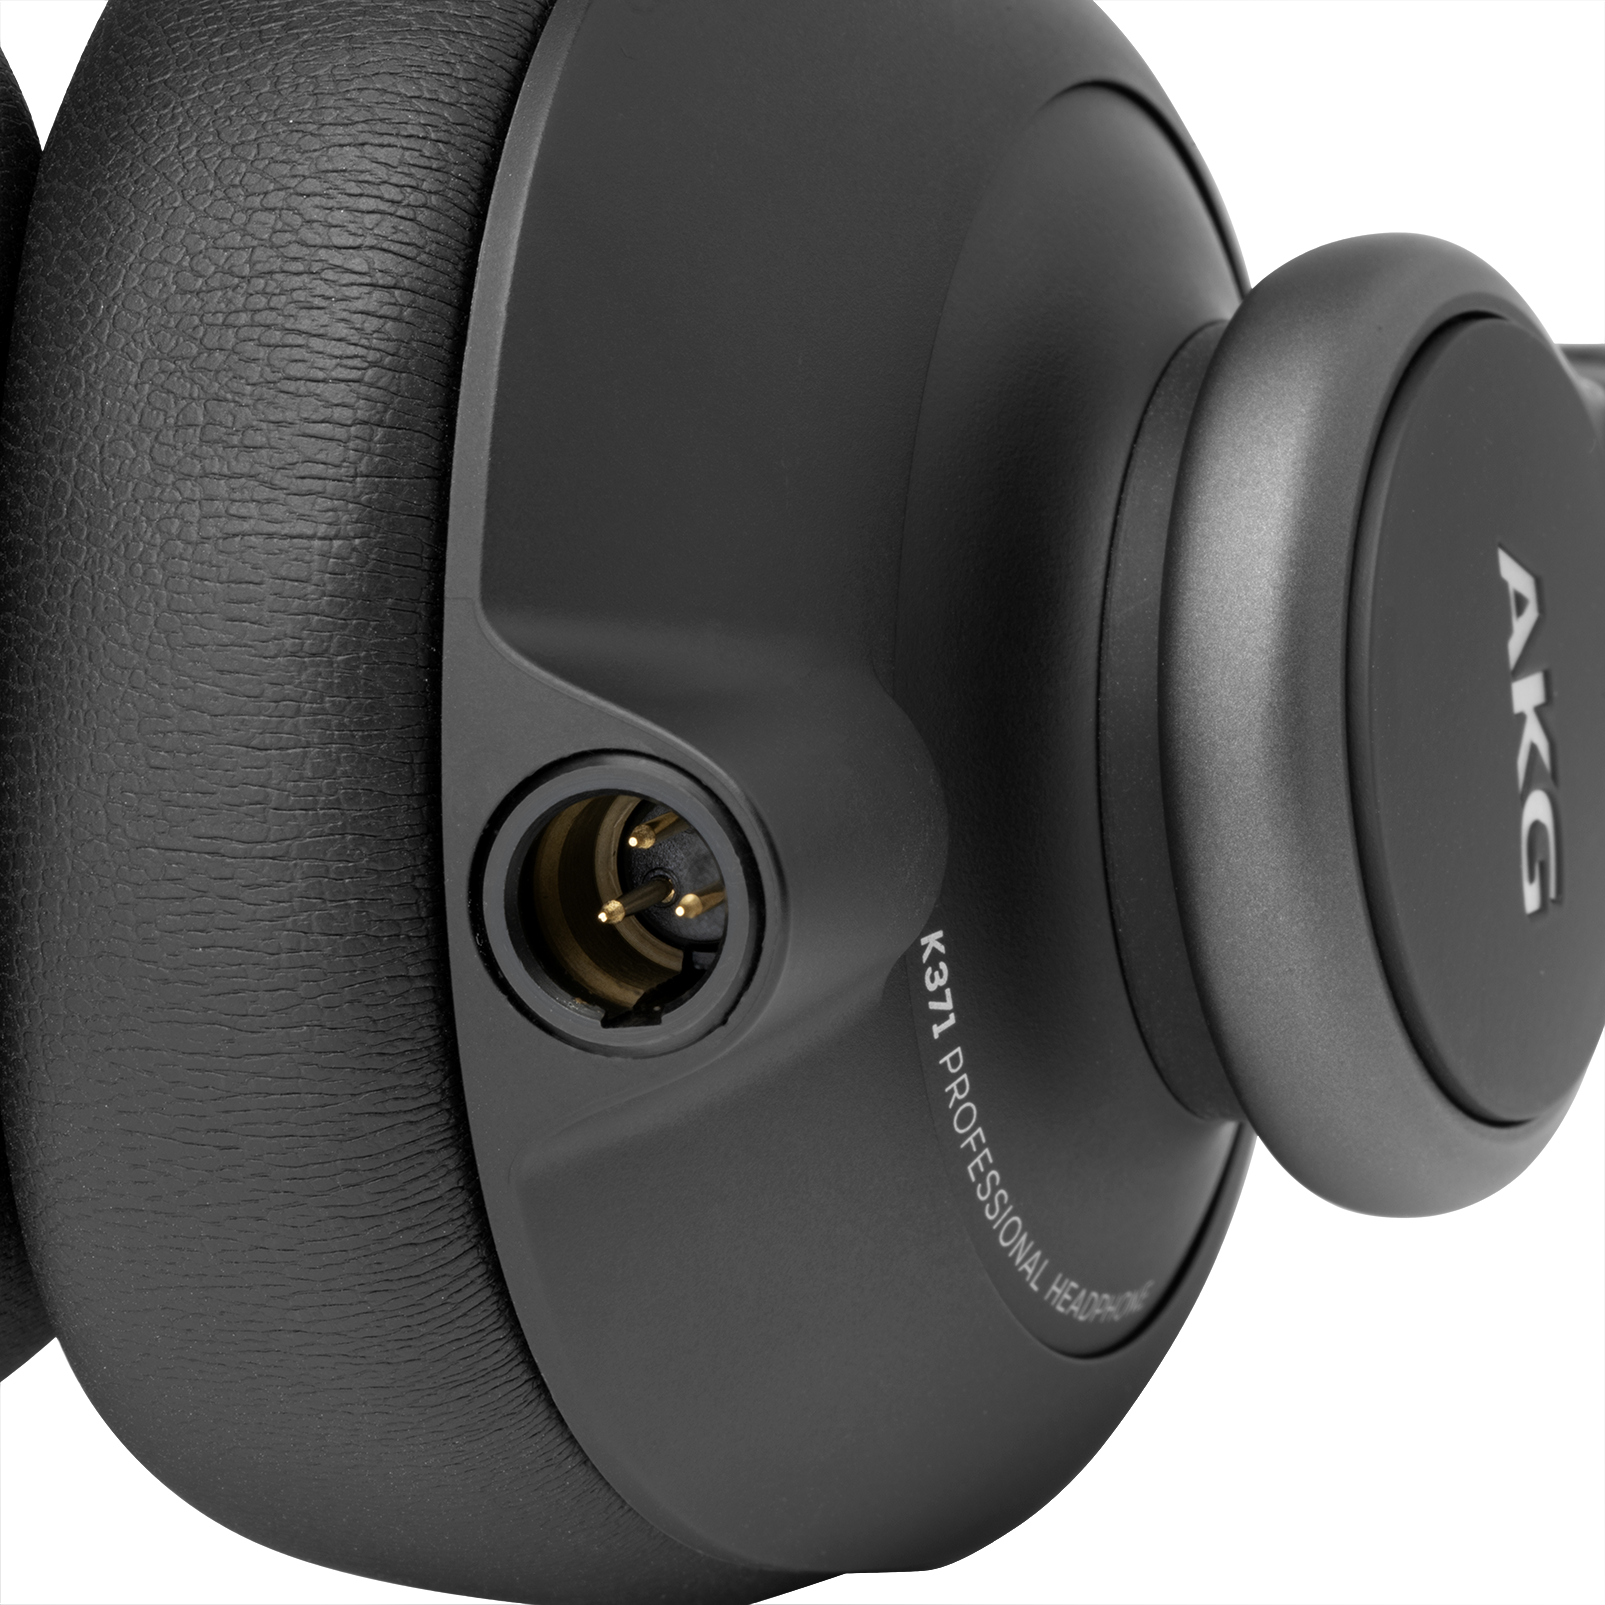 K371 | Over-ear, closed-back, foldable studio headphones